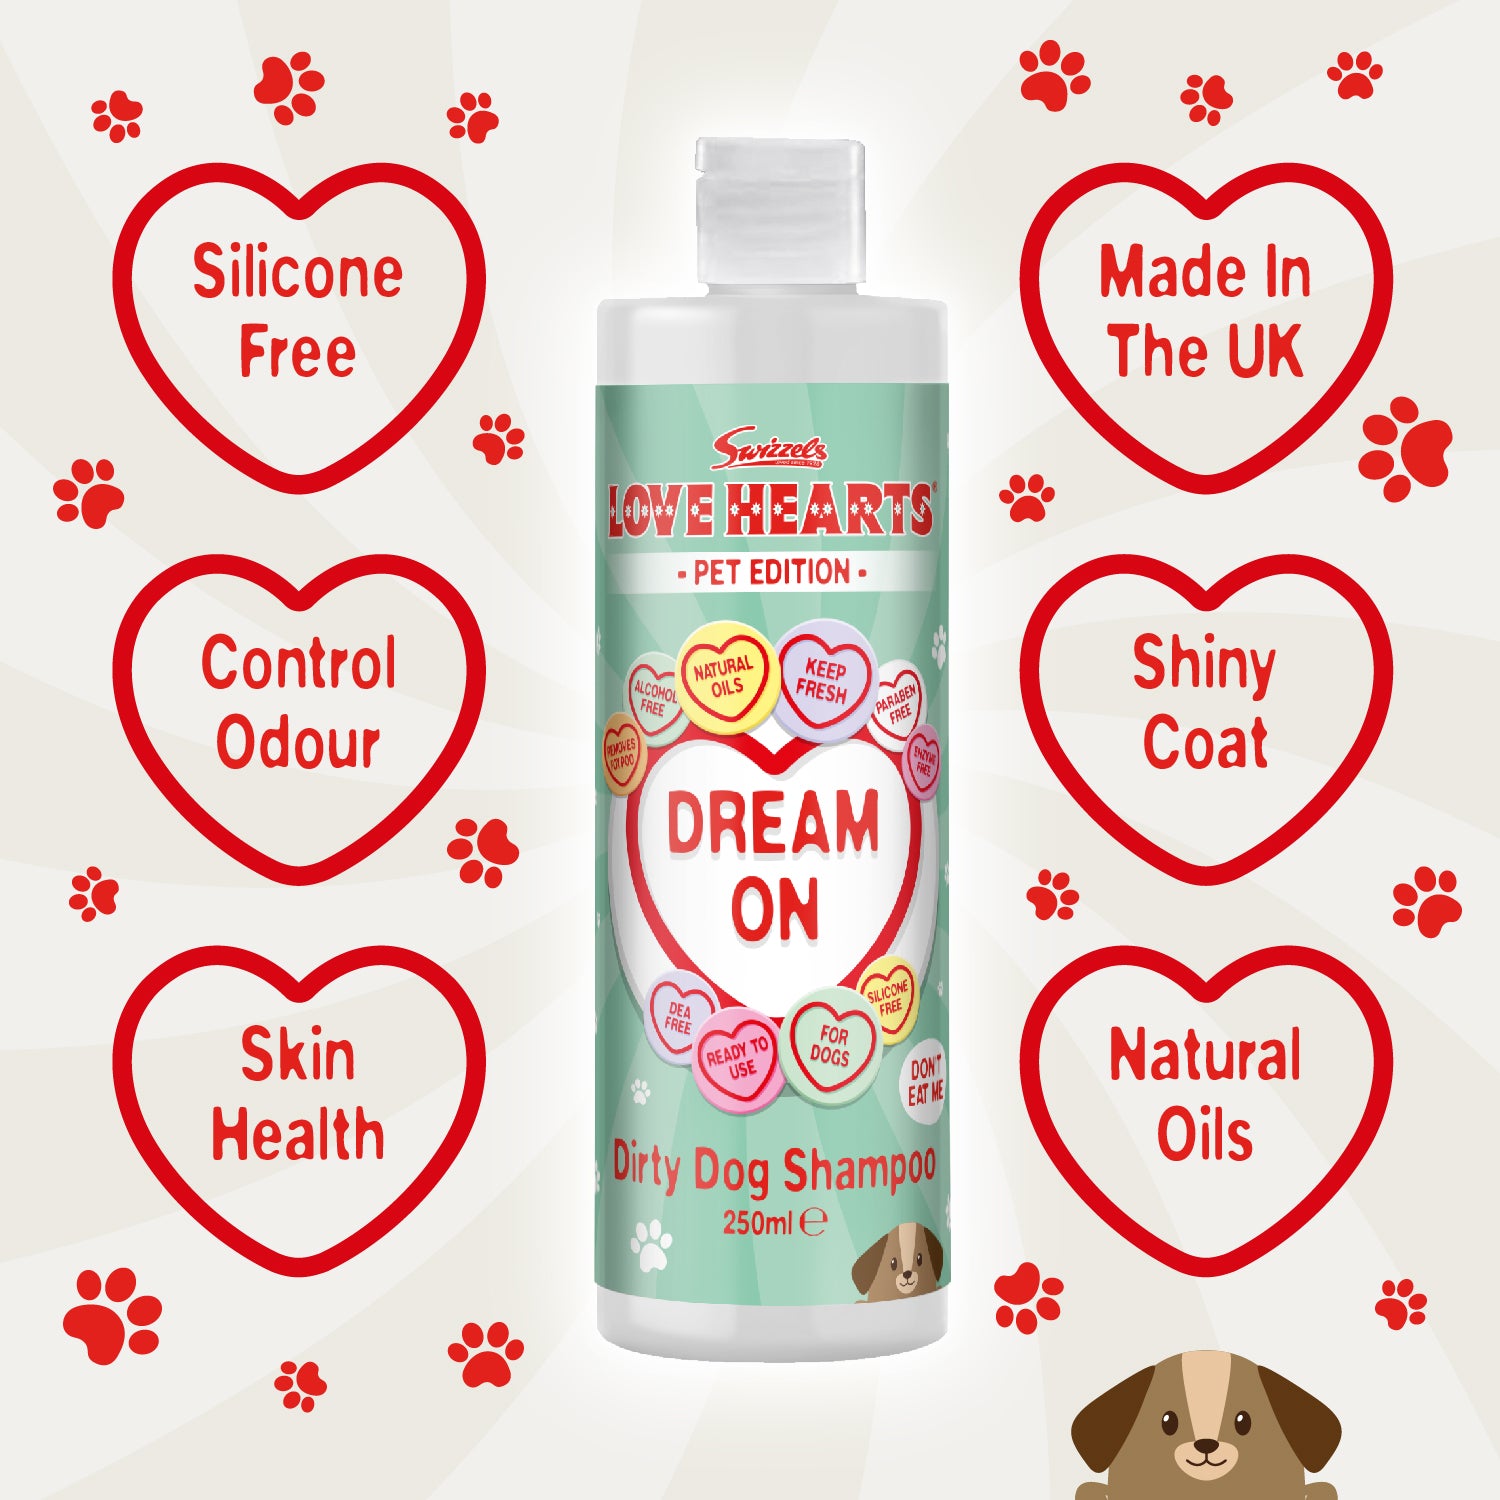 Swizzels Love Hearts - Dirty Dog Shampoo & Dry Wash Shampoo - 2 x 250ml